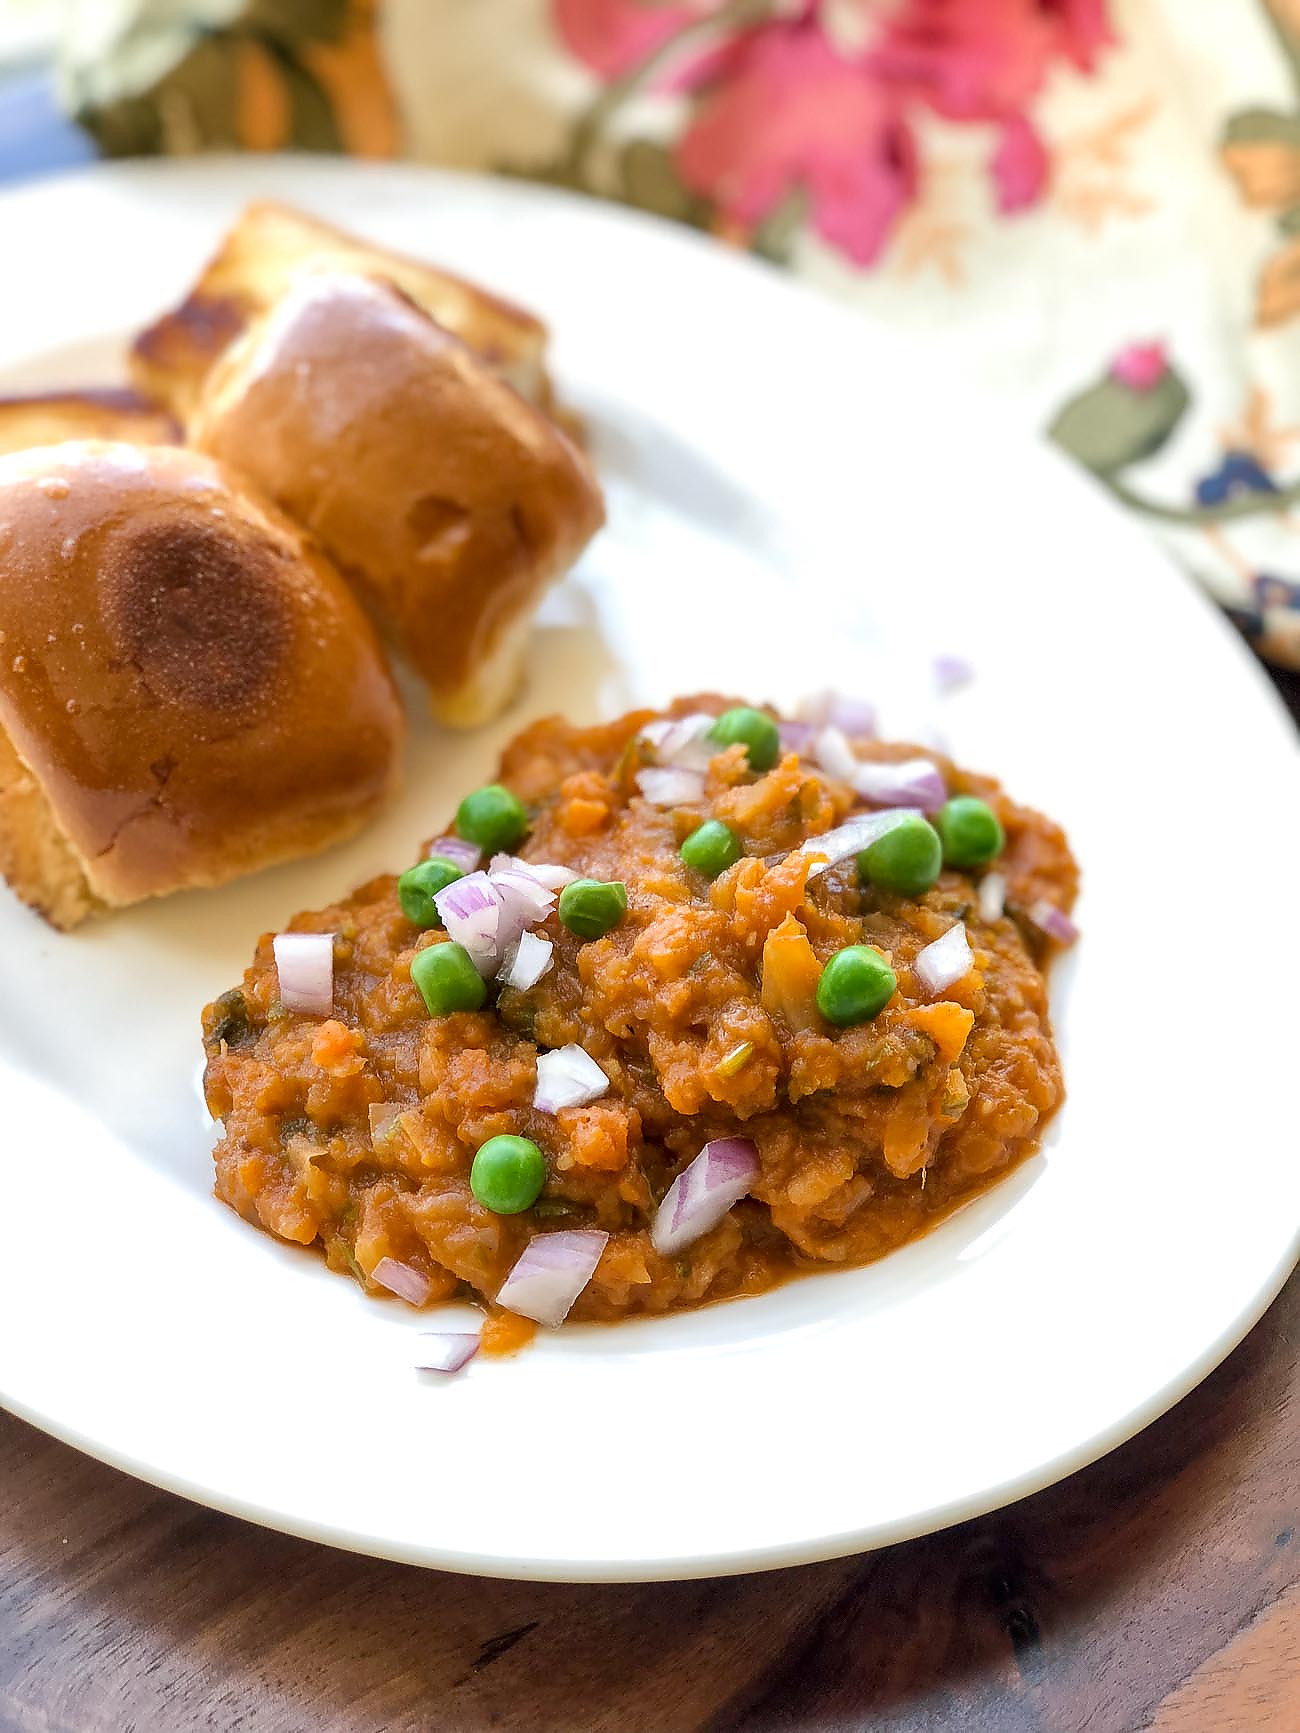 One Pot Pressure Cooker Pav Bhaji Recipe - Delicious Mumbai Style Street Food 